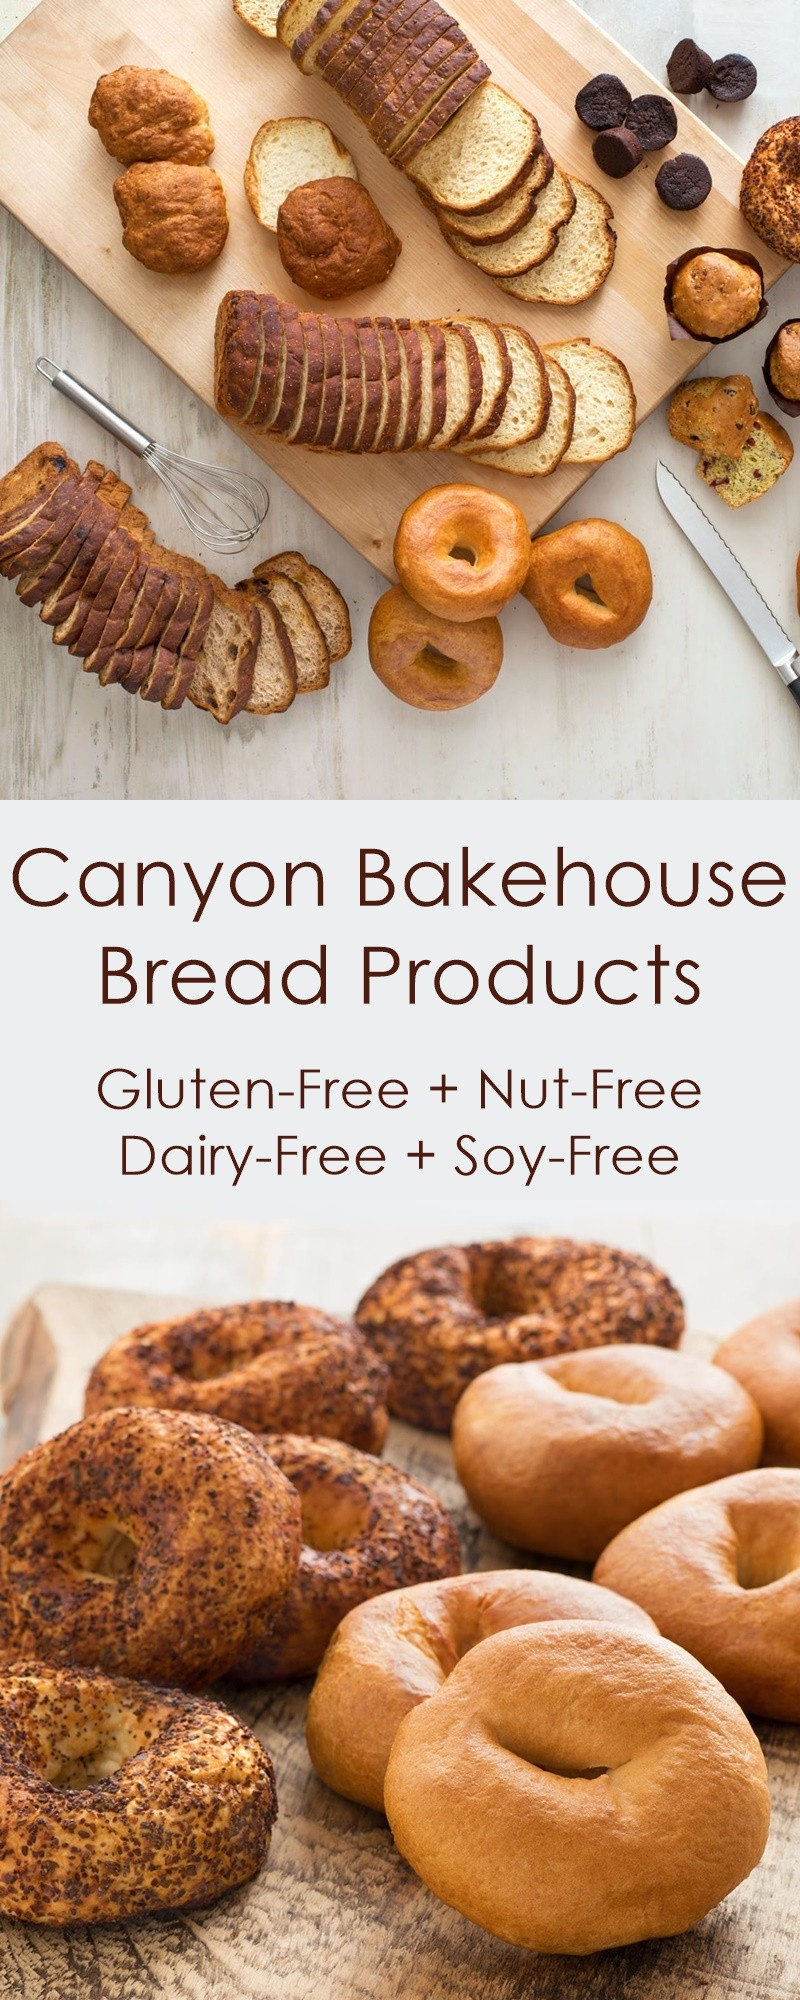 Canyon Bakehouse Gluten Free Bread
 Canyon Bakehouse Gluten Free Bread Review Go Dairy Free